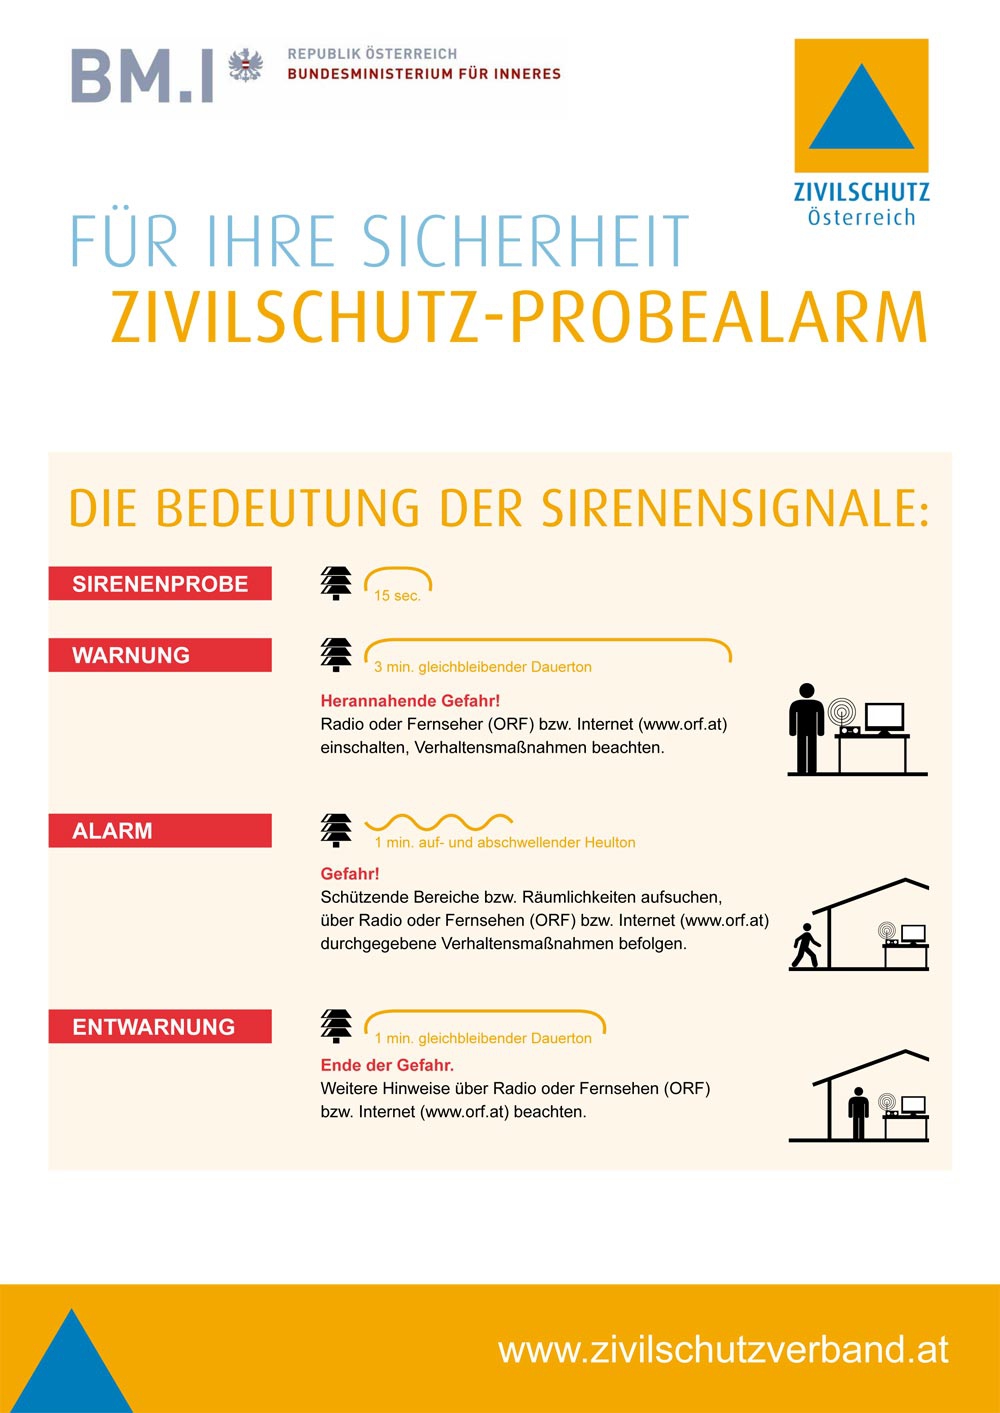 Wiener Neustadt: Zivilschutz-Probealarm am 6. Oktober